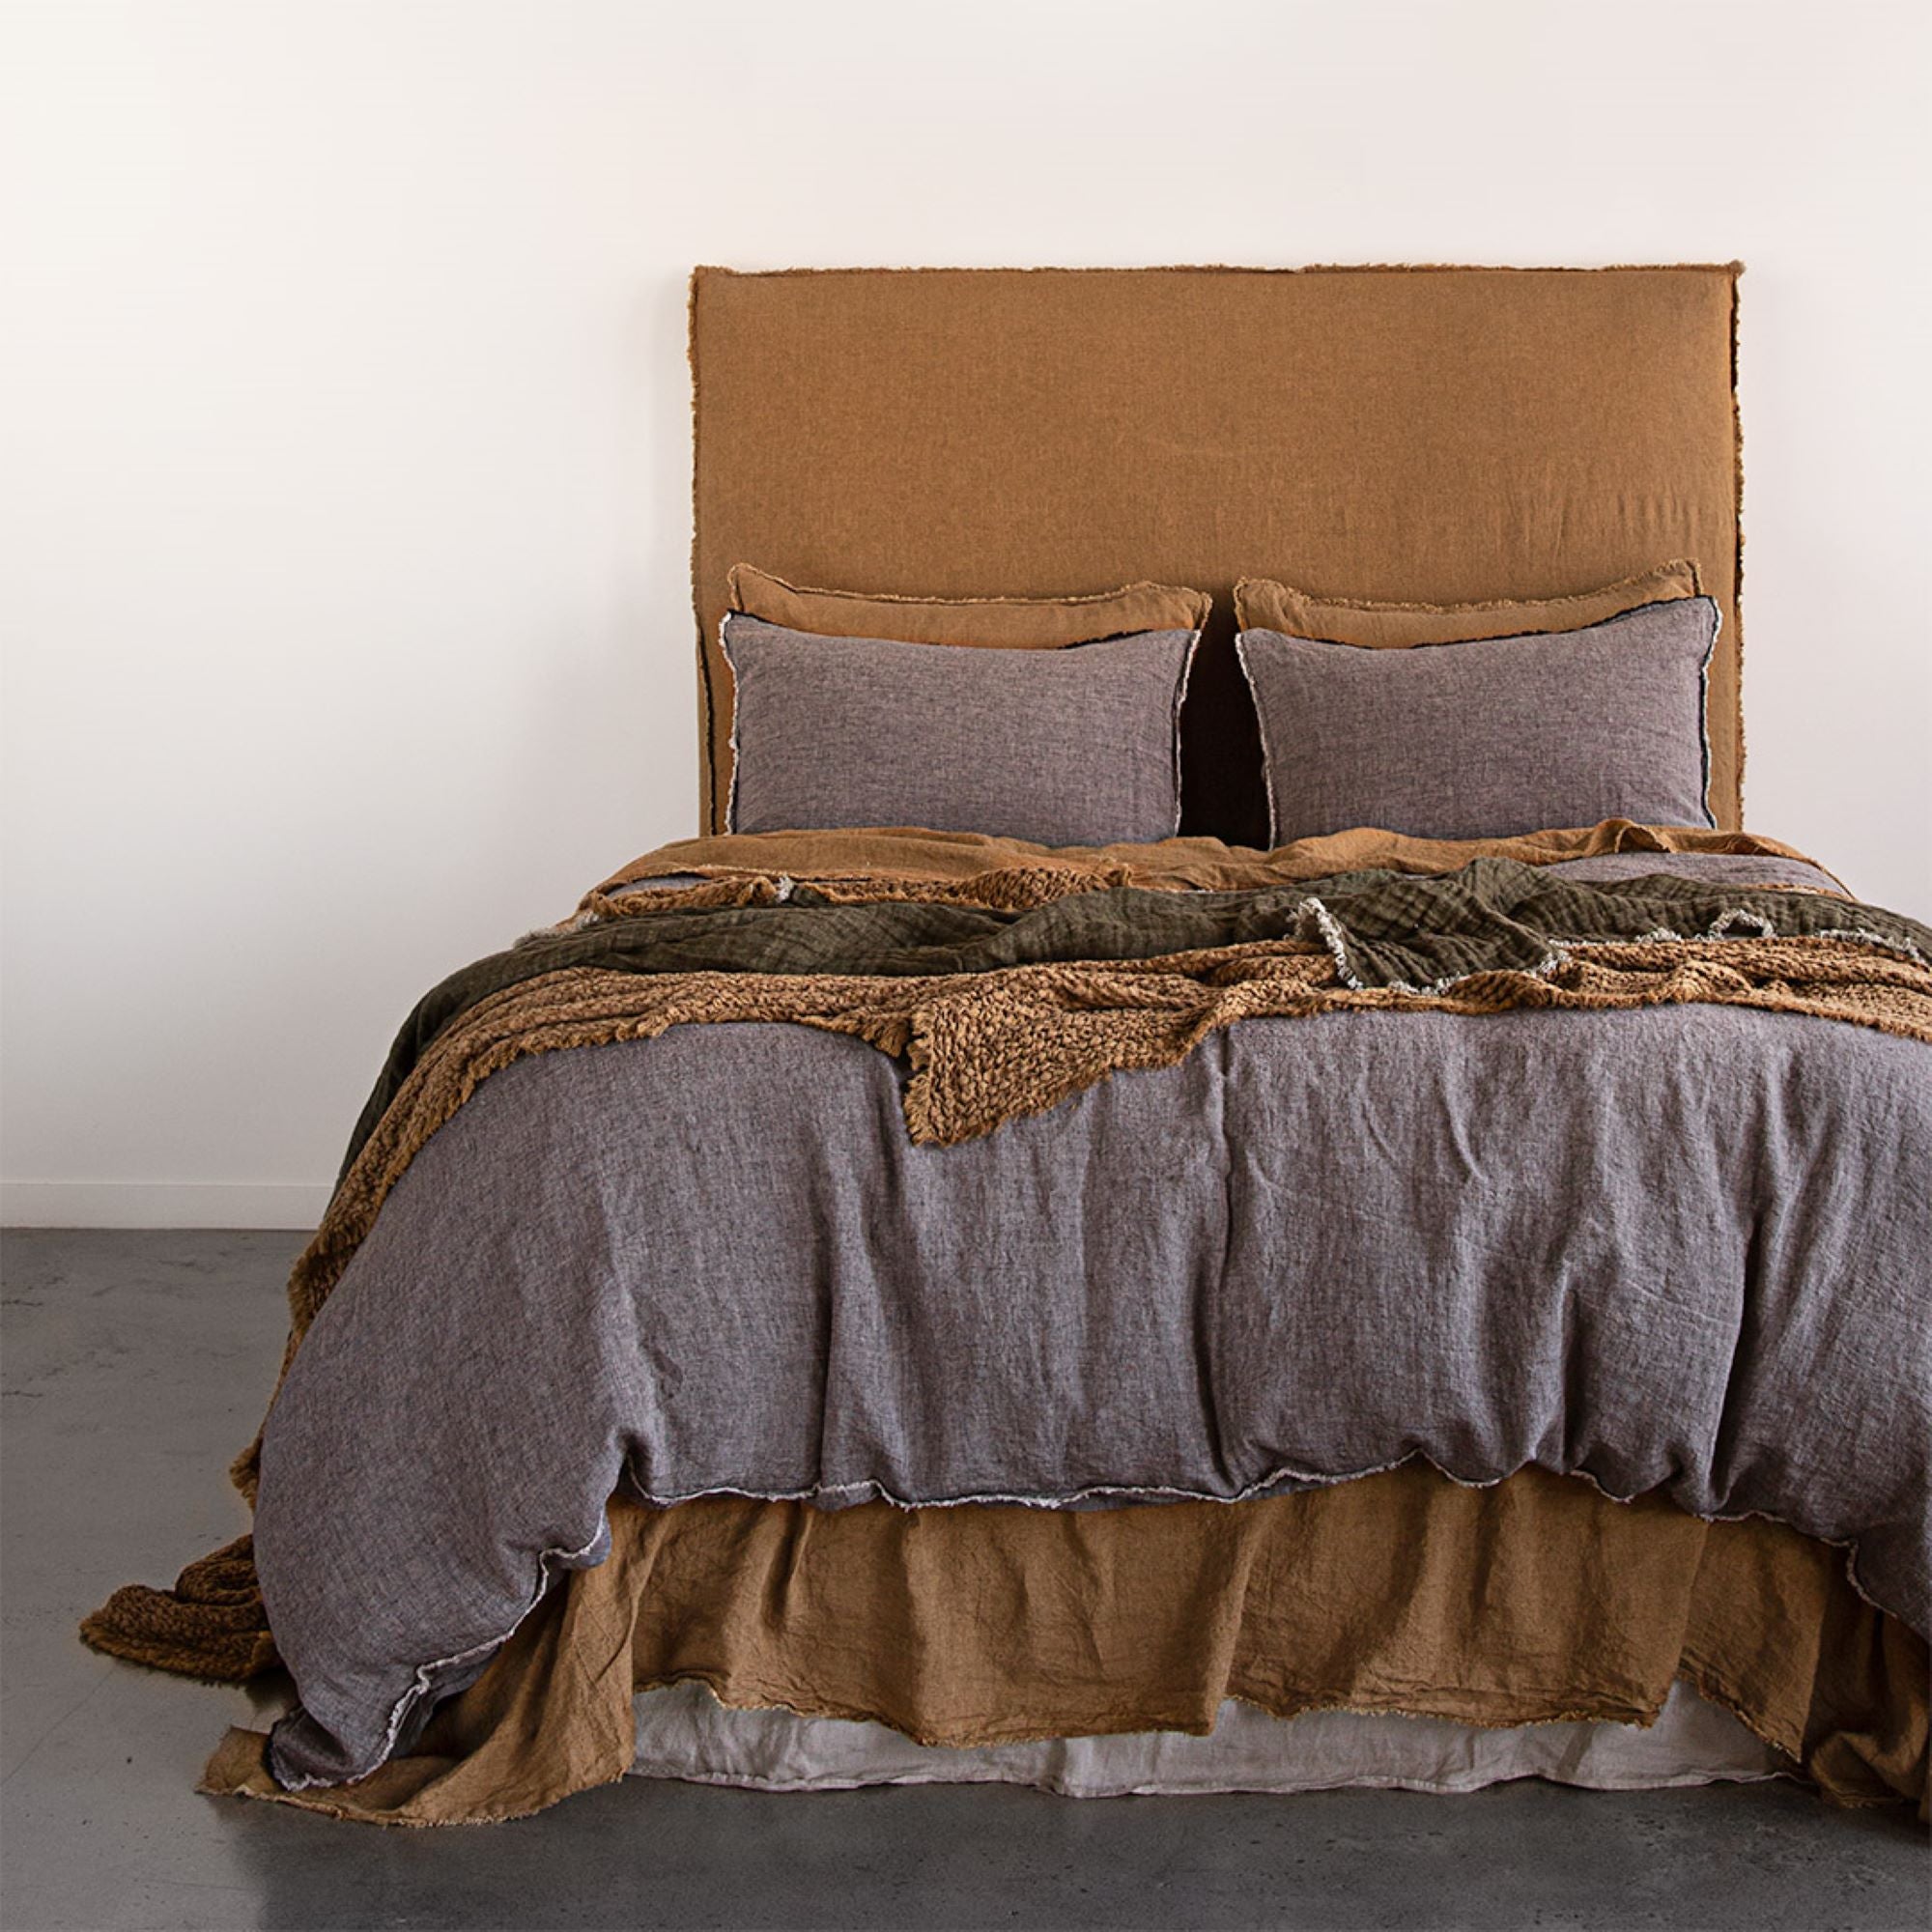 Linen Bedhead & Cover | Rust tone | Hale Mercantile Co.